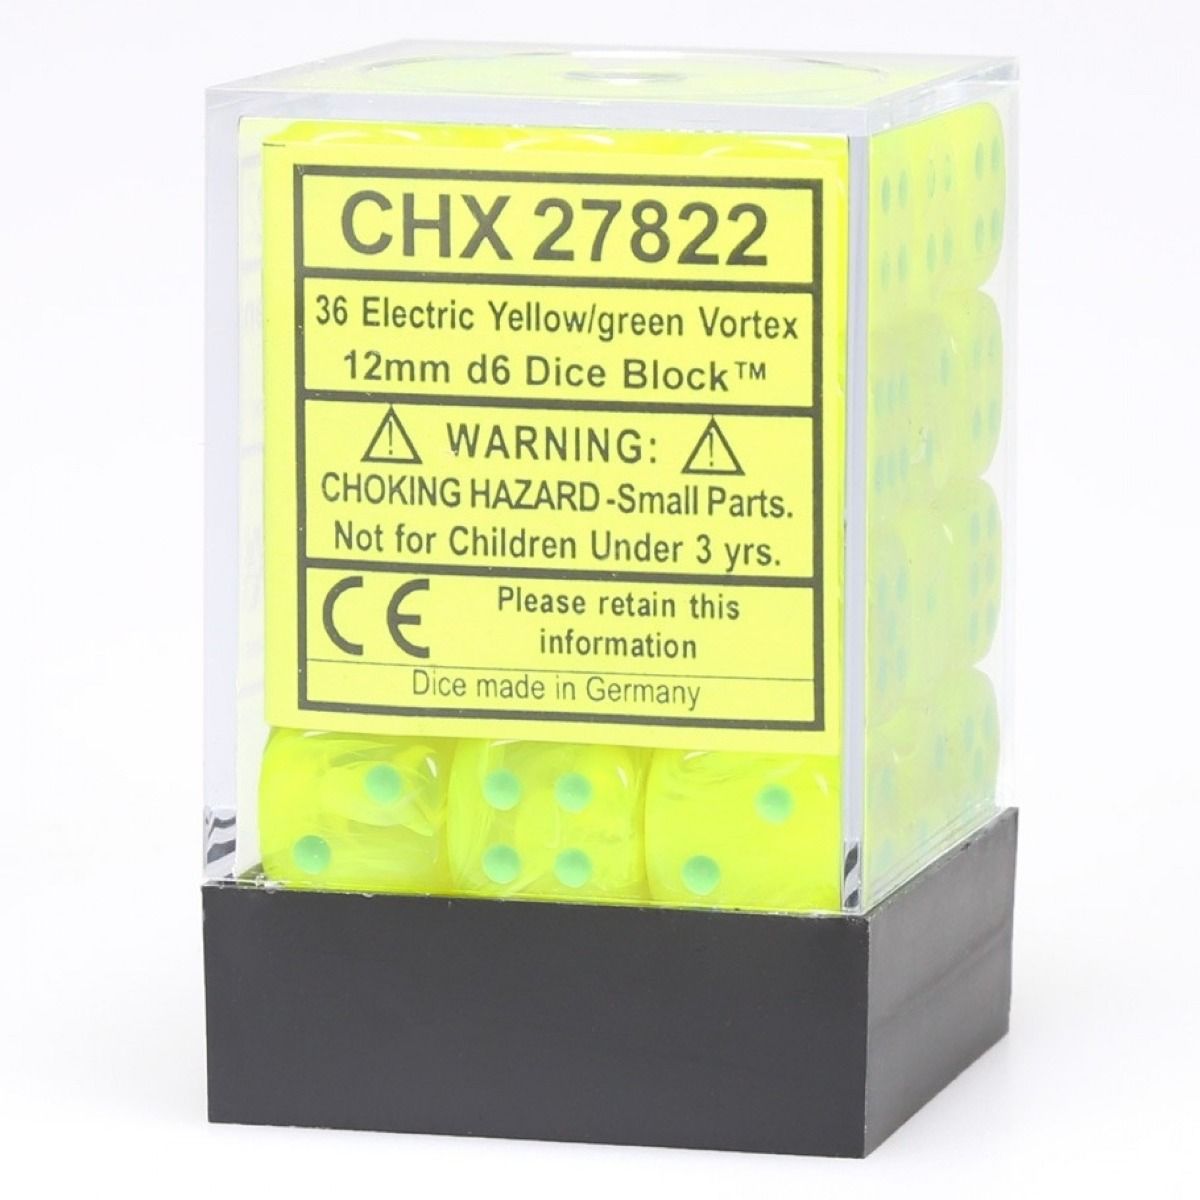 Chessex Vortex 12mm d6 エレクトリック イエロー/ホワイト ブロック (36) 